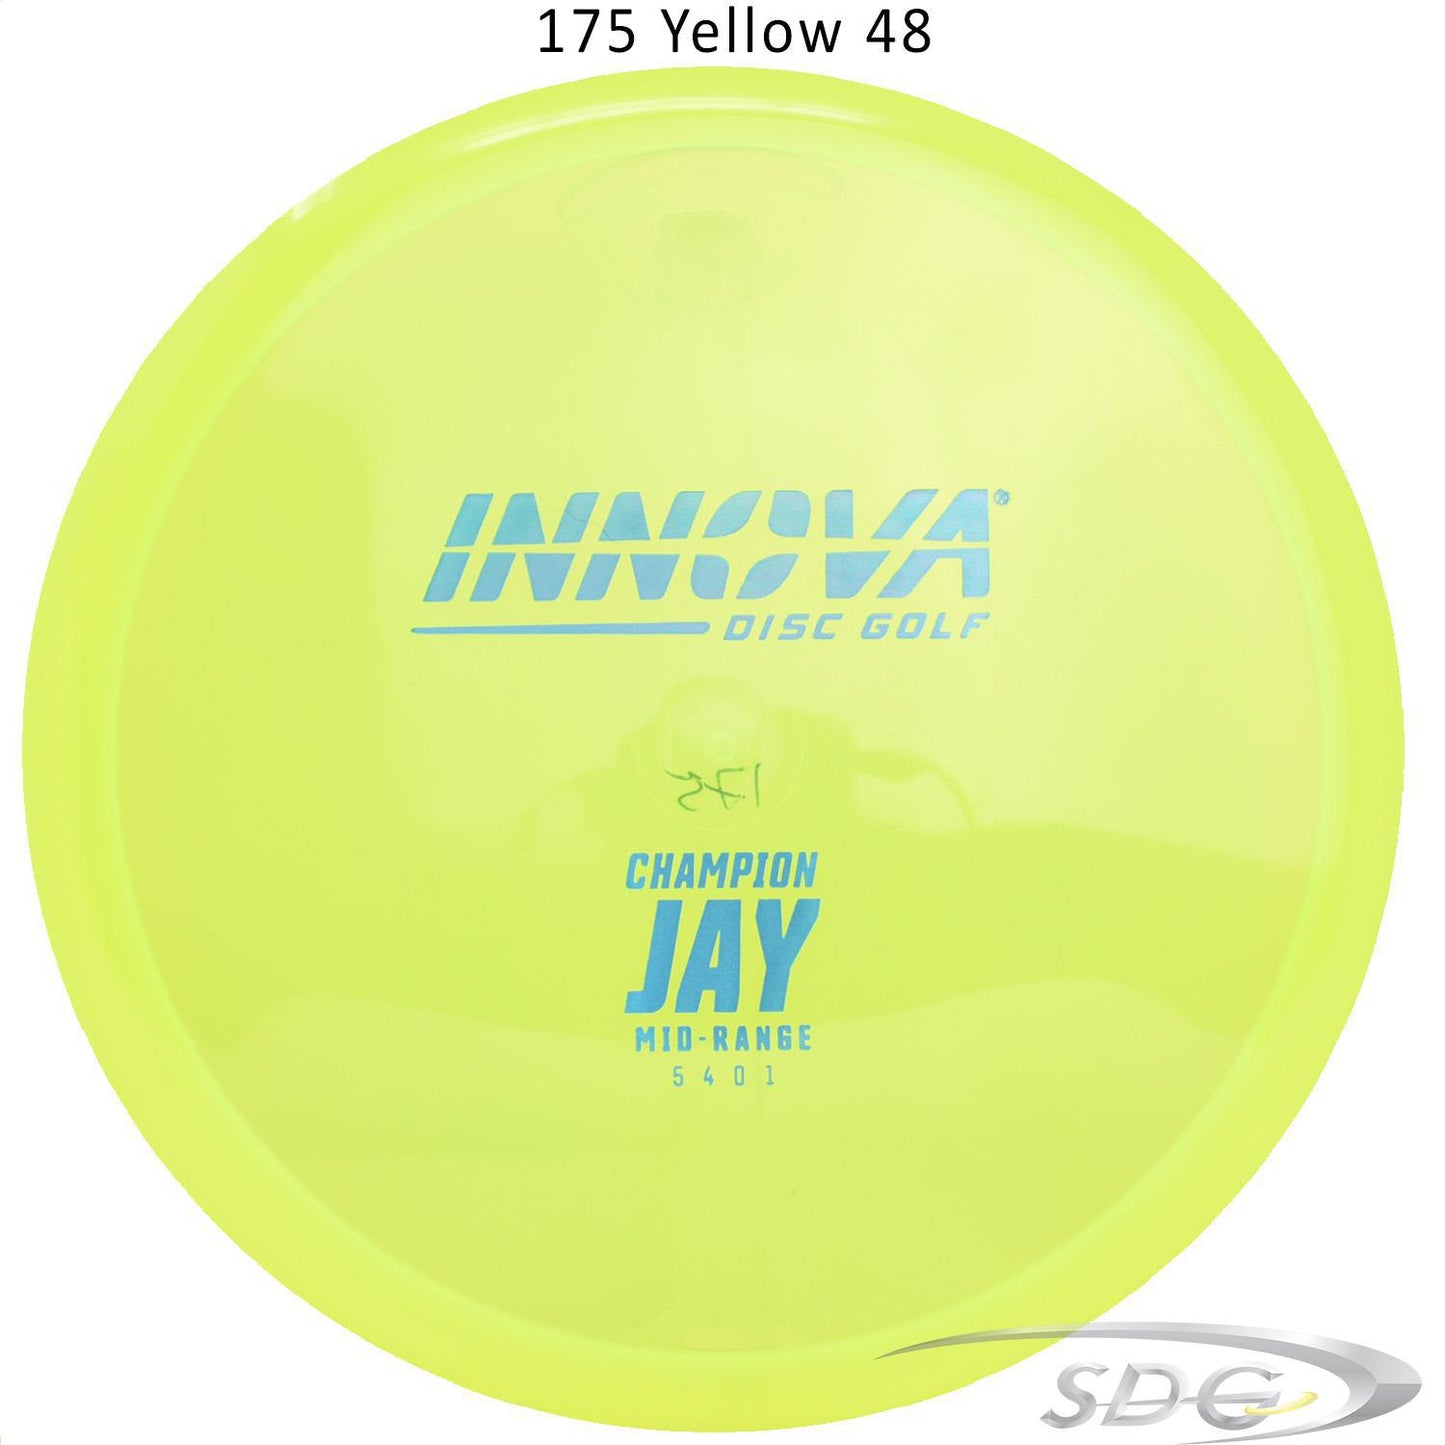 innova-champion-jay-disc-golf-mid-range 175 Yellow 48 